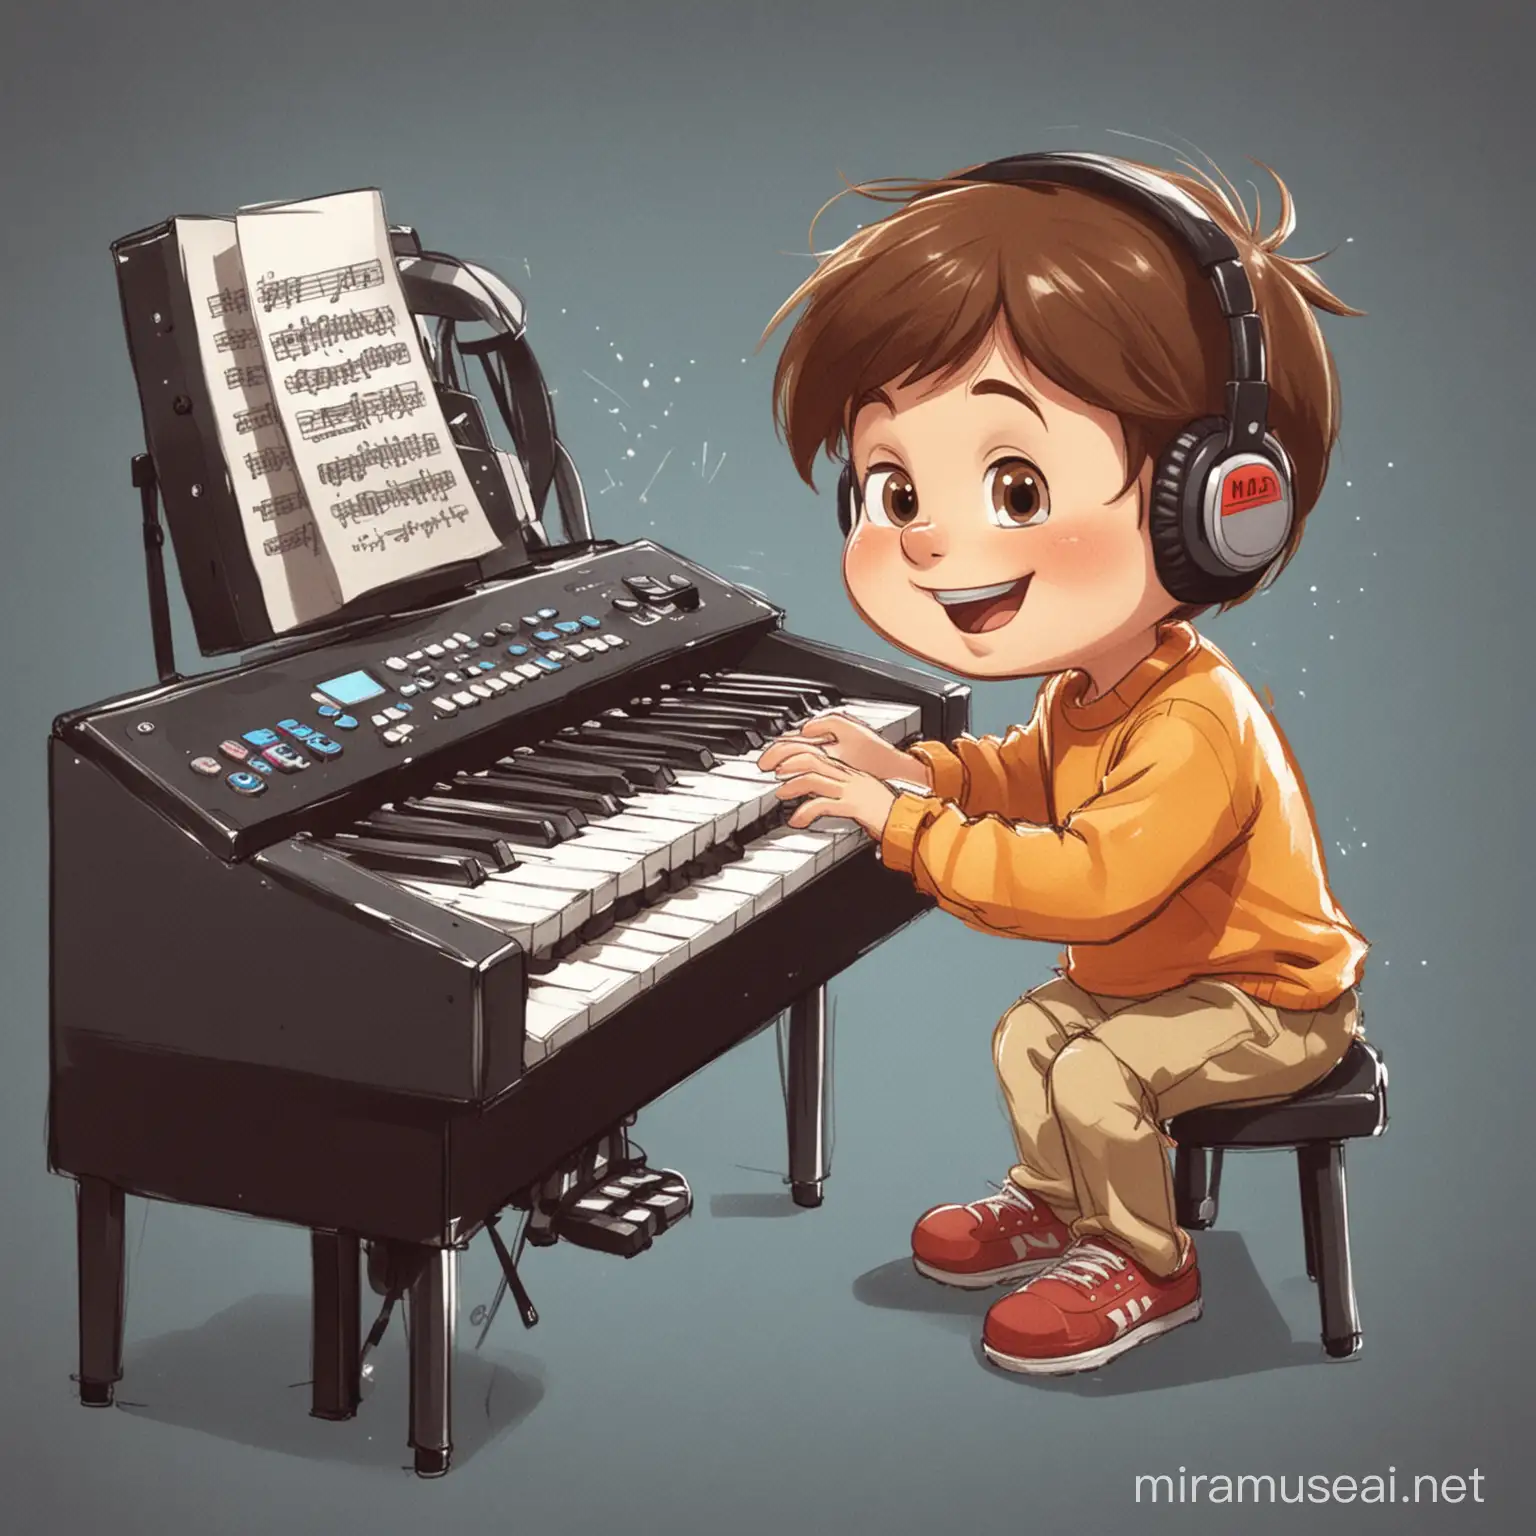 Cheerful Child Playing Keyboard Fun Cartoon Illustration